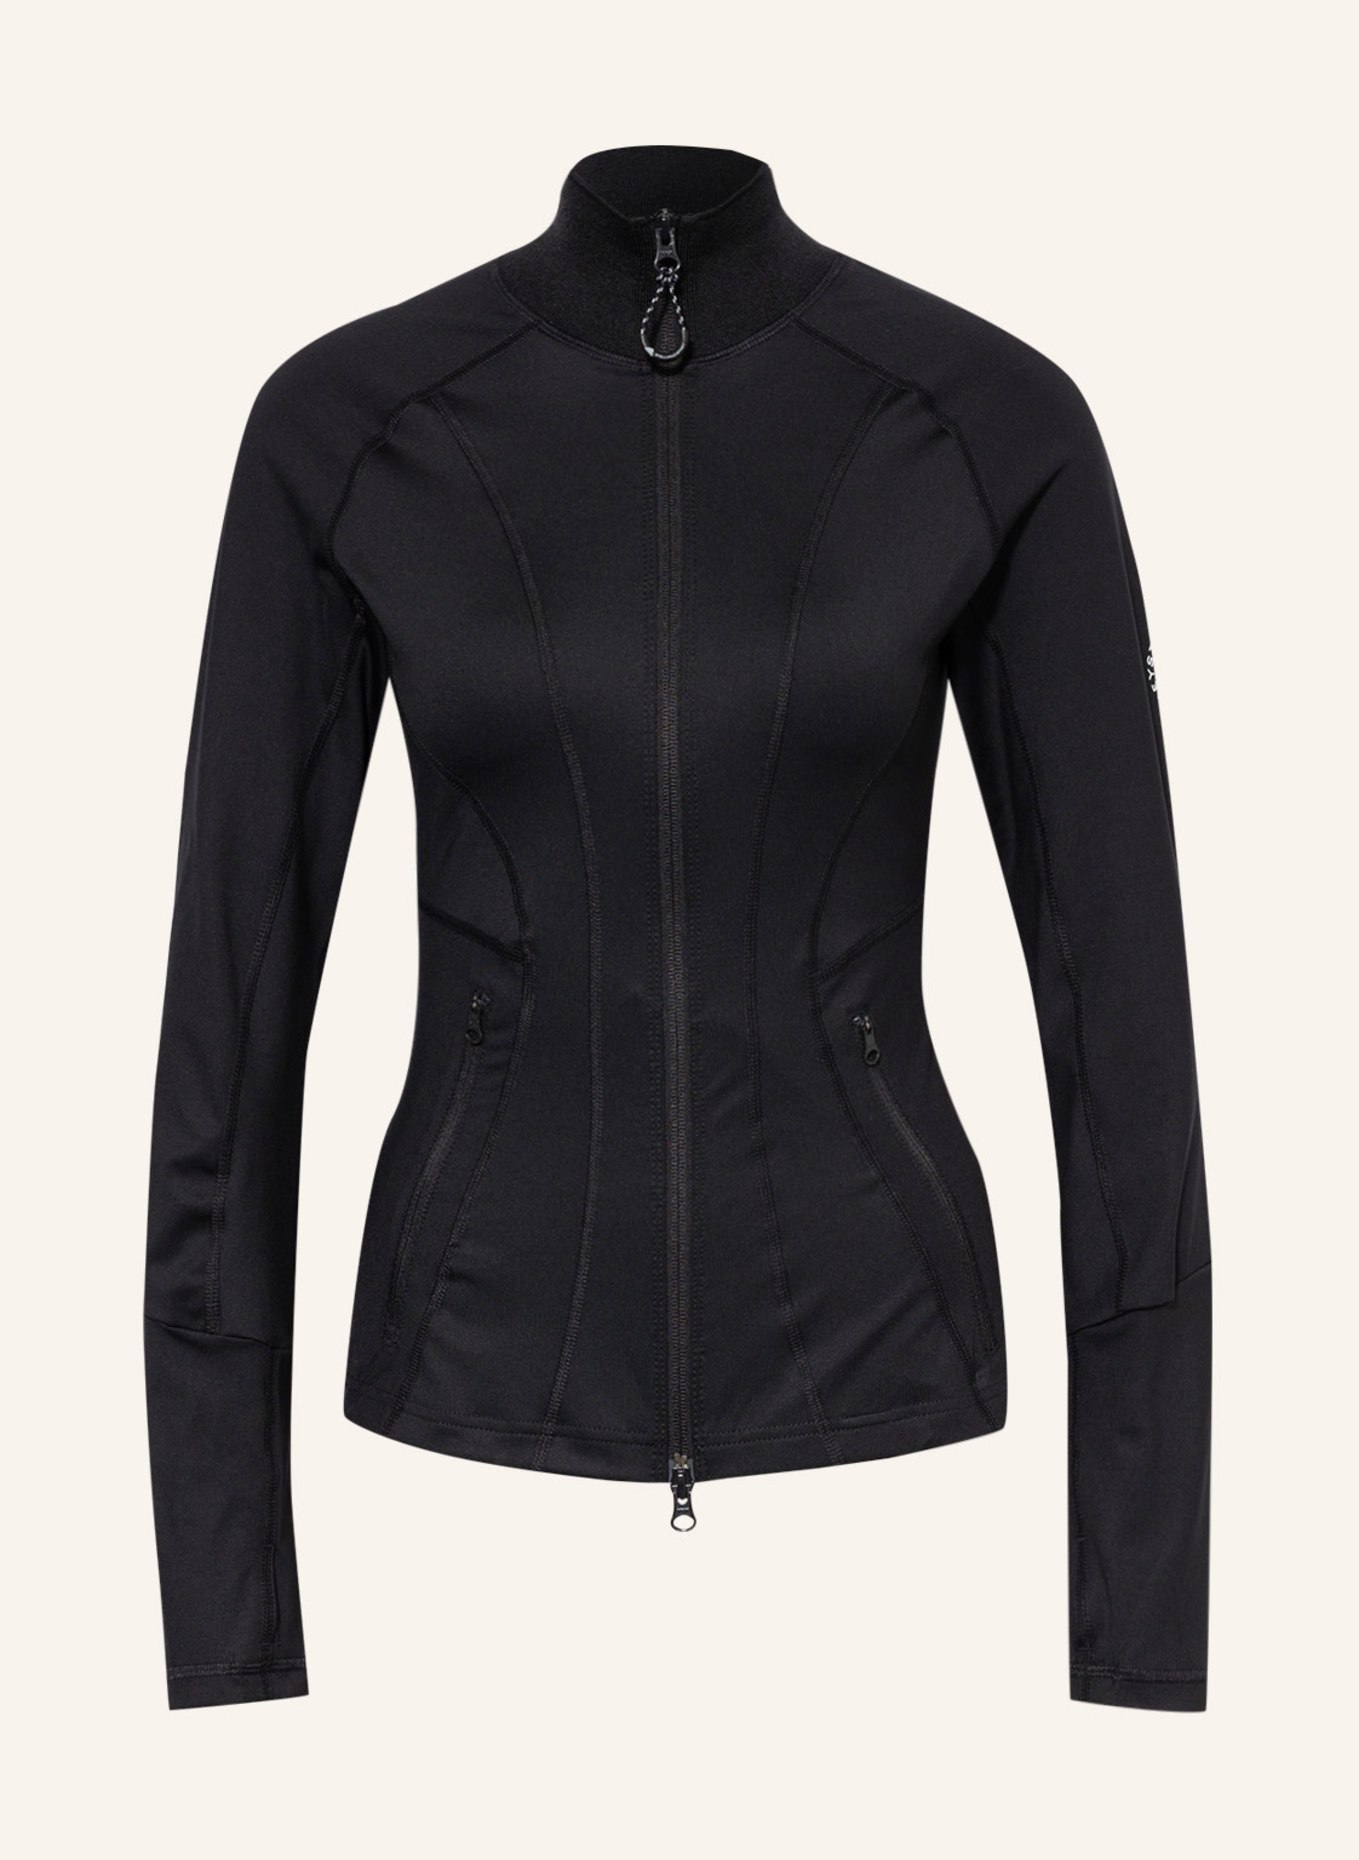 adidas by Stella McCartney Fitness jacket TRUEPURPOSE in black